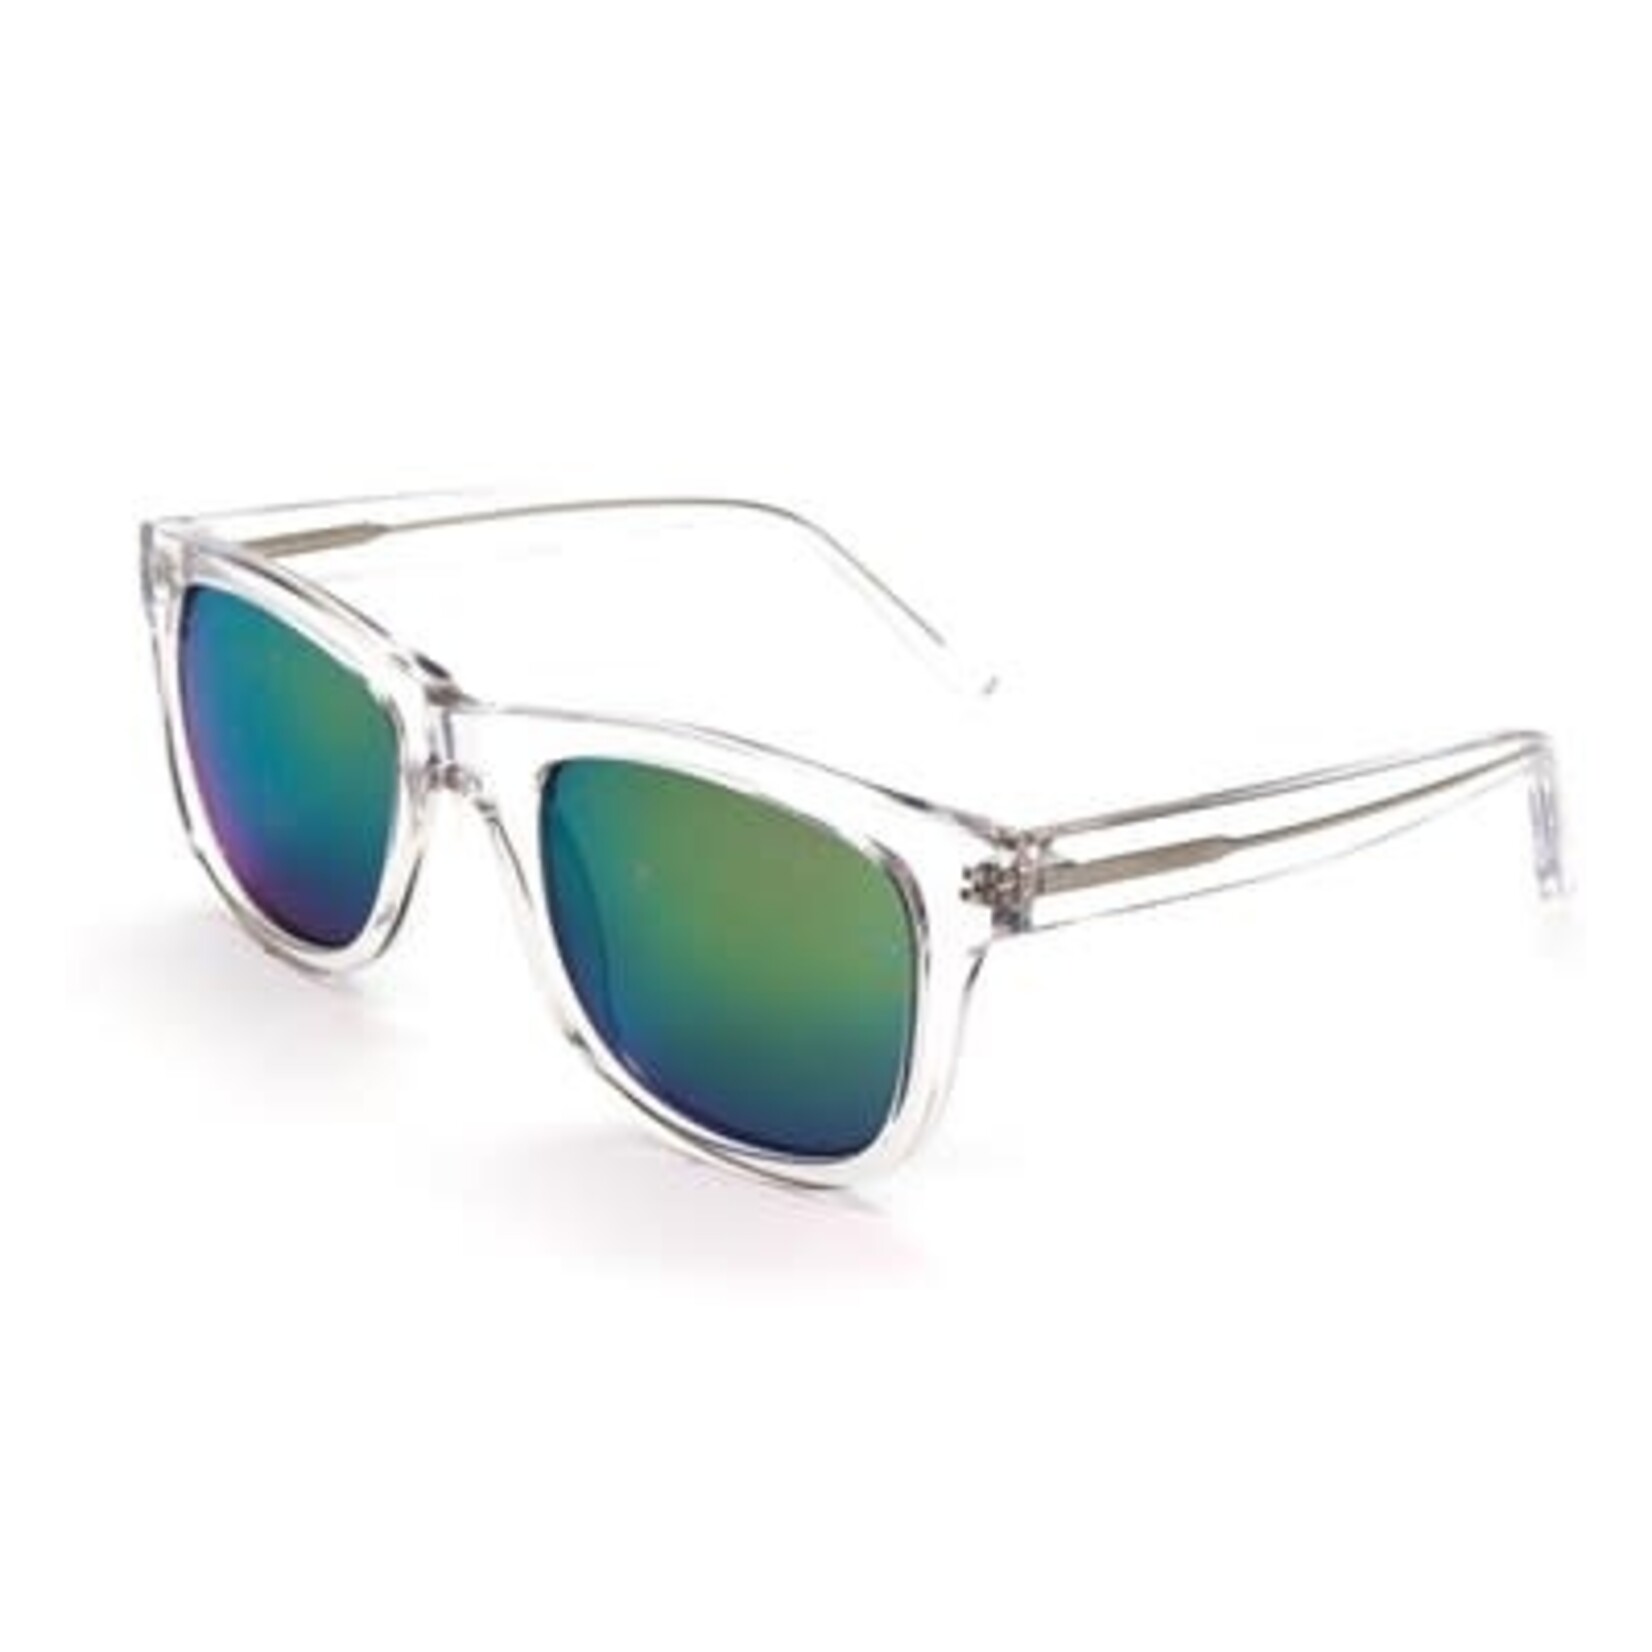 Optimum Optical Malibu Sunglasses